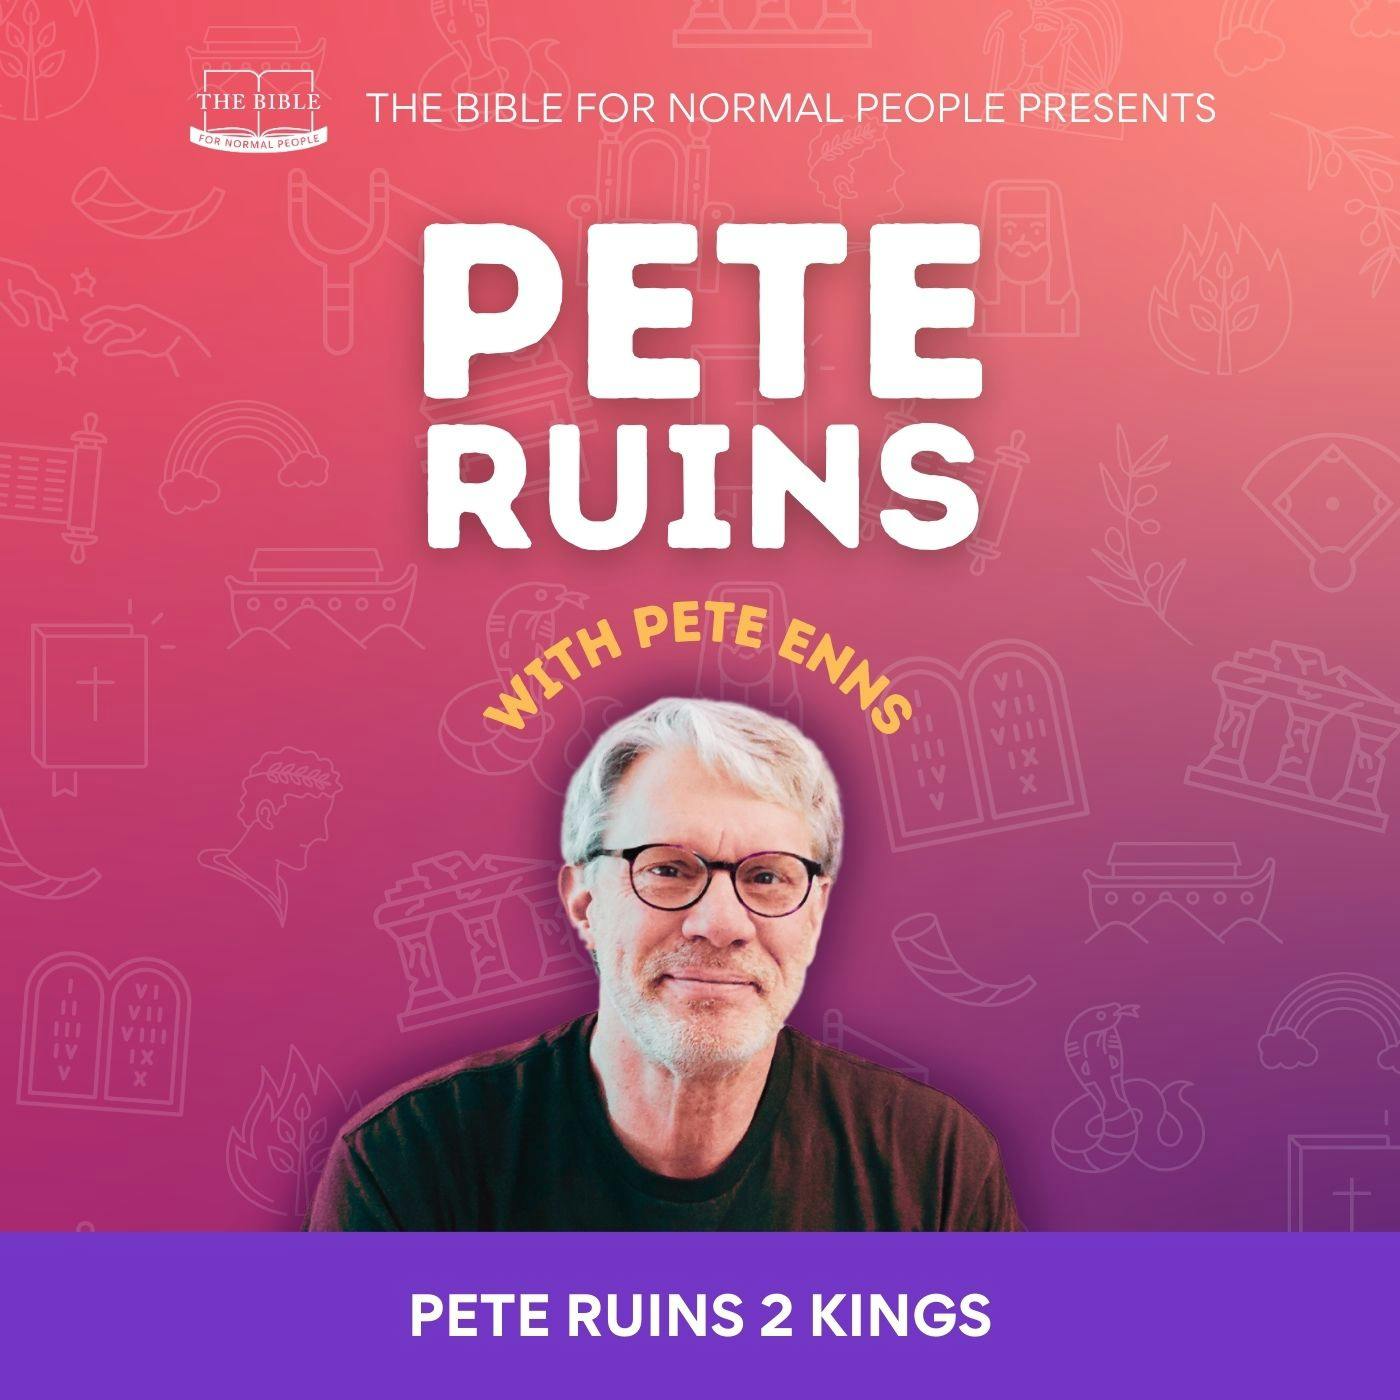 [Bible] Episode 265: Pete Enns - Pete Ruins 2 Kings